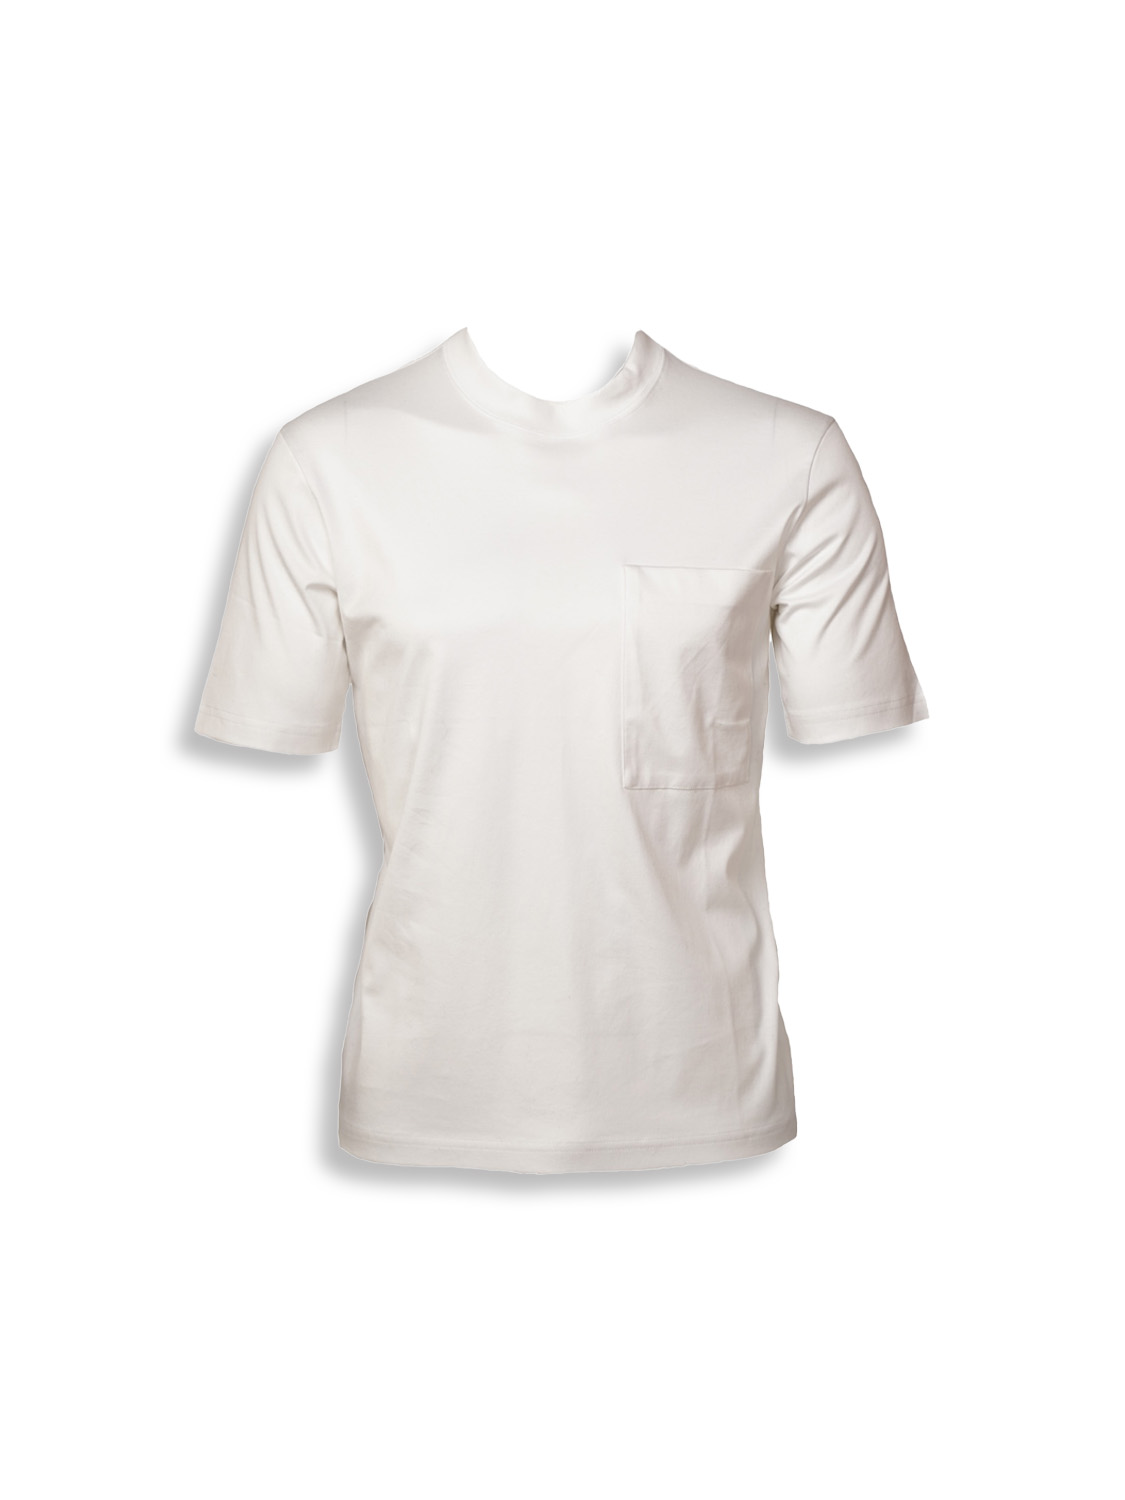 Stefan Brandt Eike - Camiseta de algodón blanco M